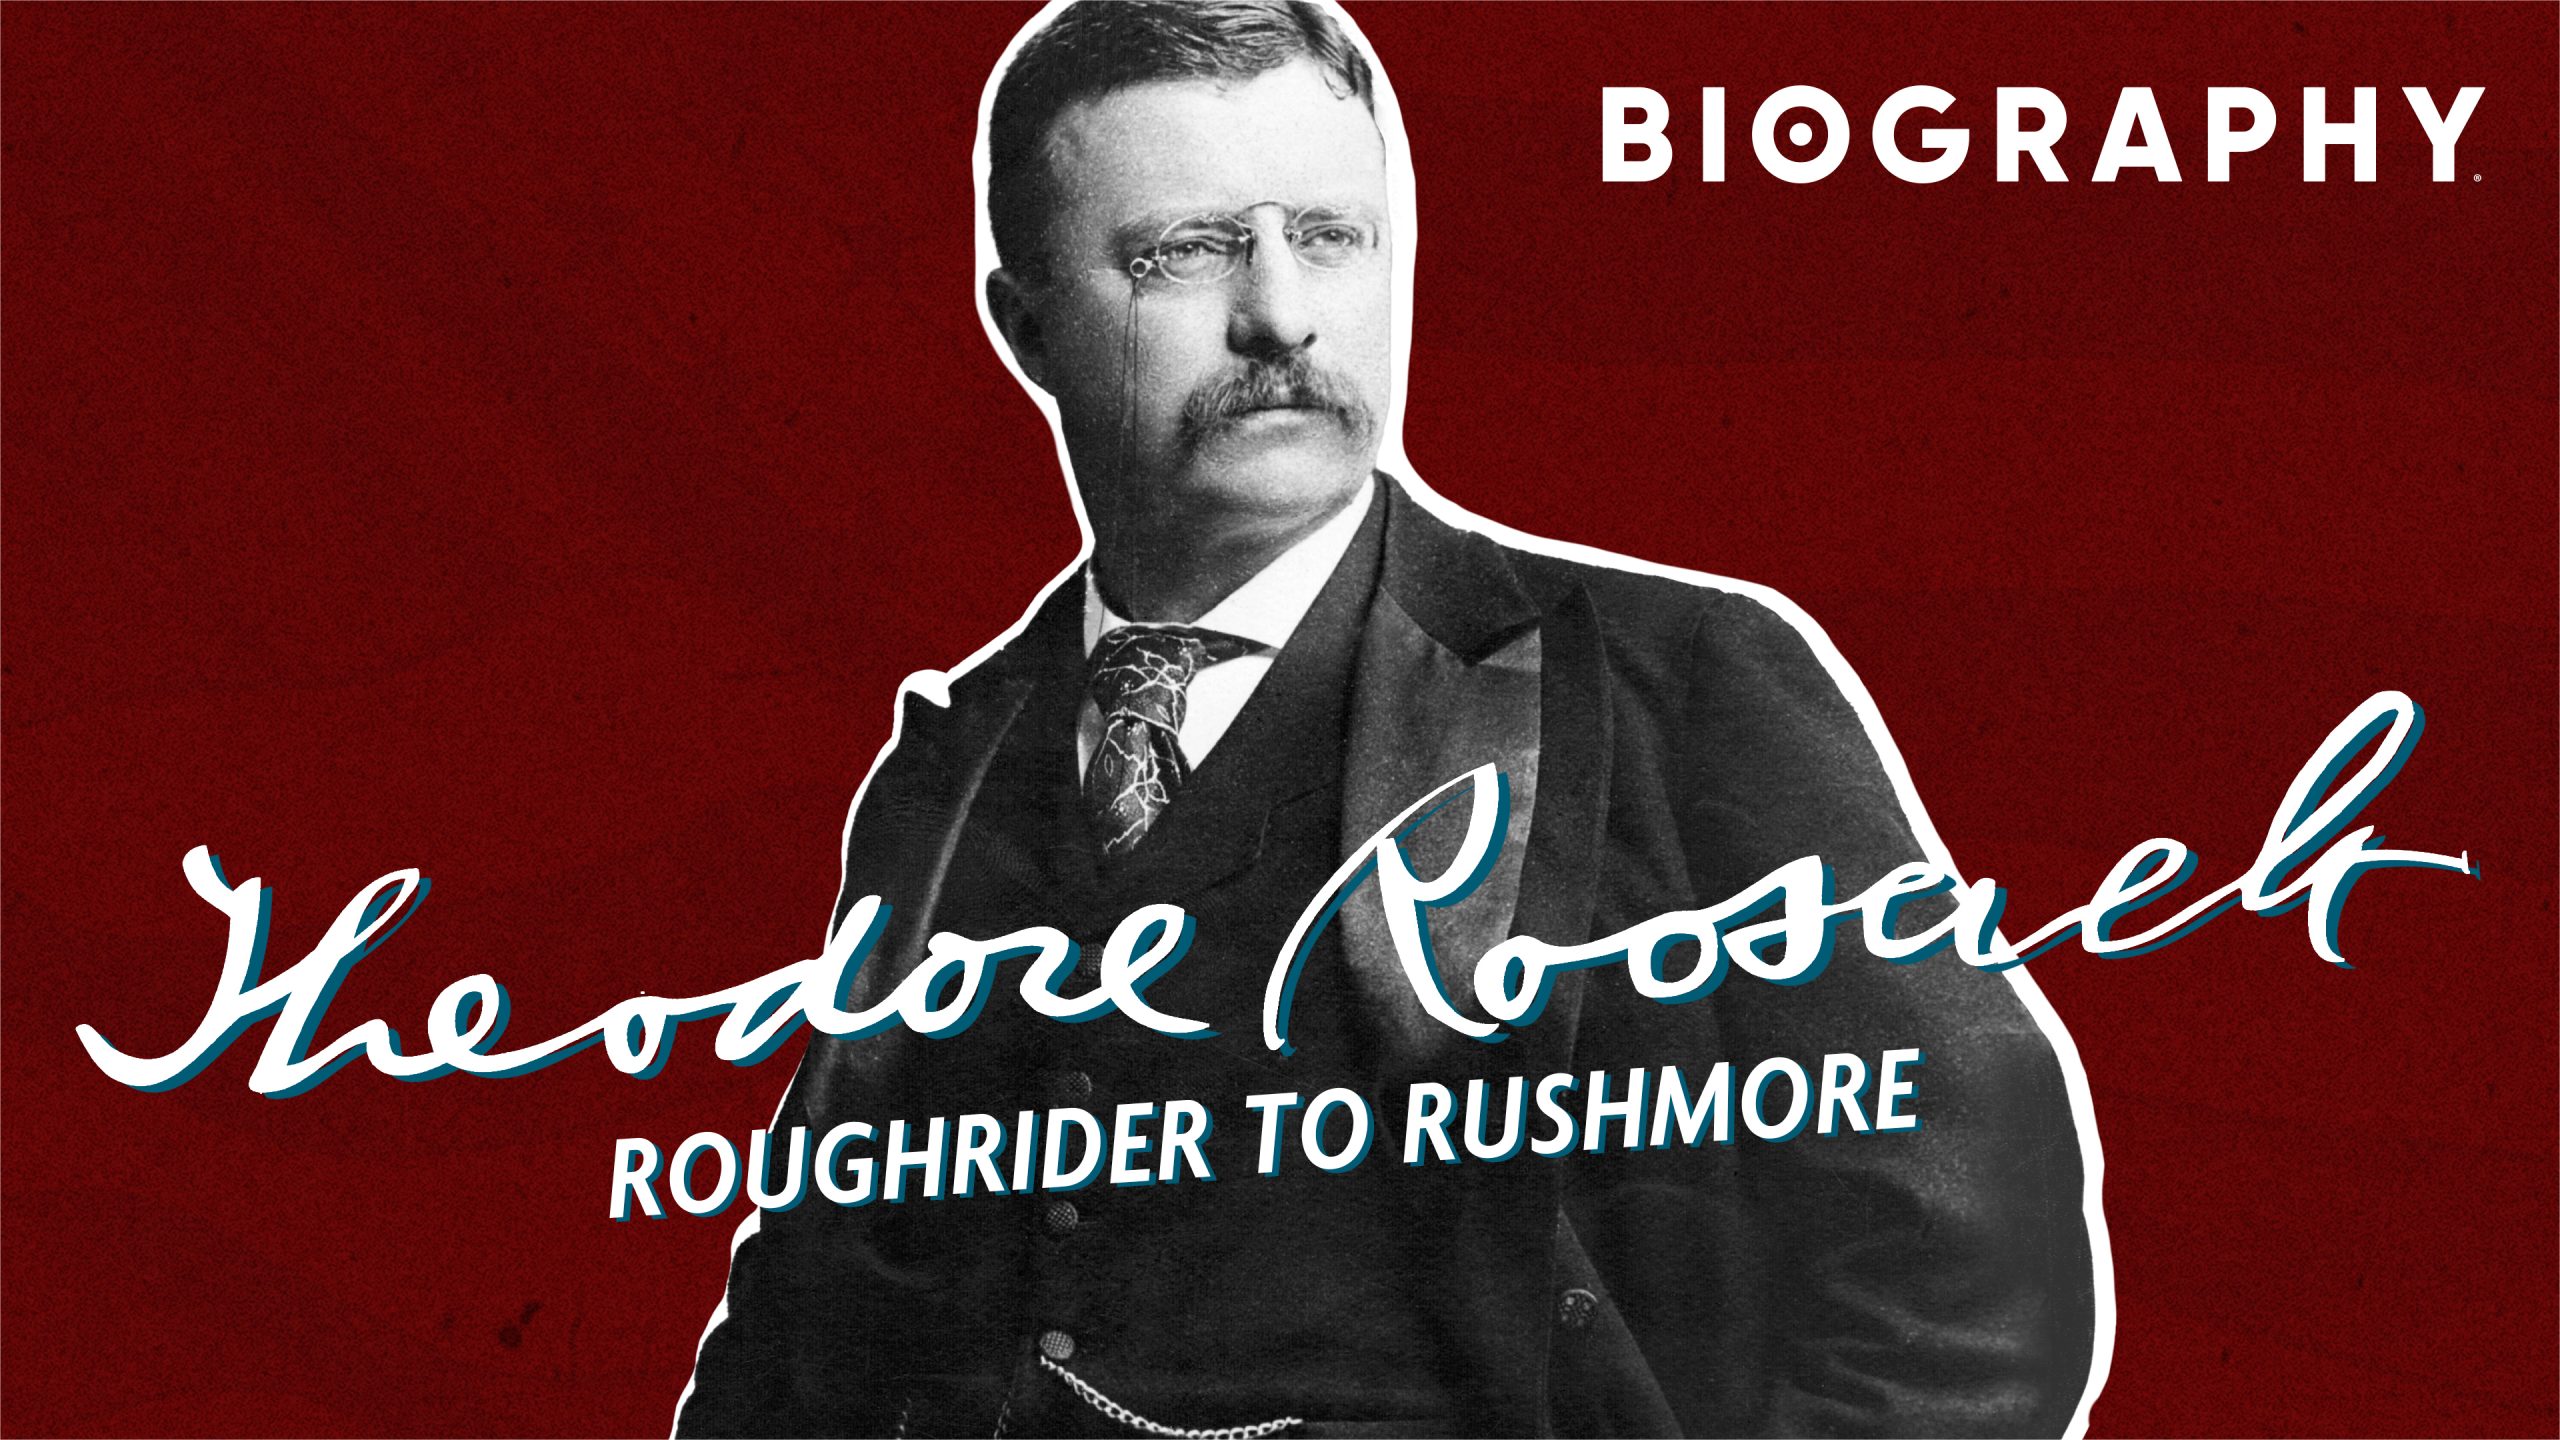 History Vault: 'Theodore Roosevelt: Roughrider to Rushmore'